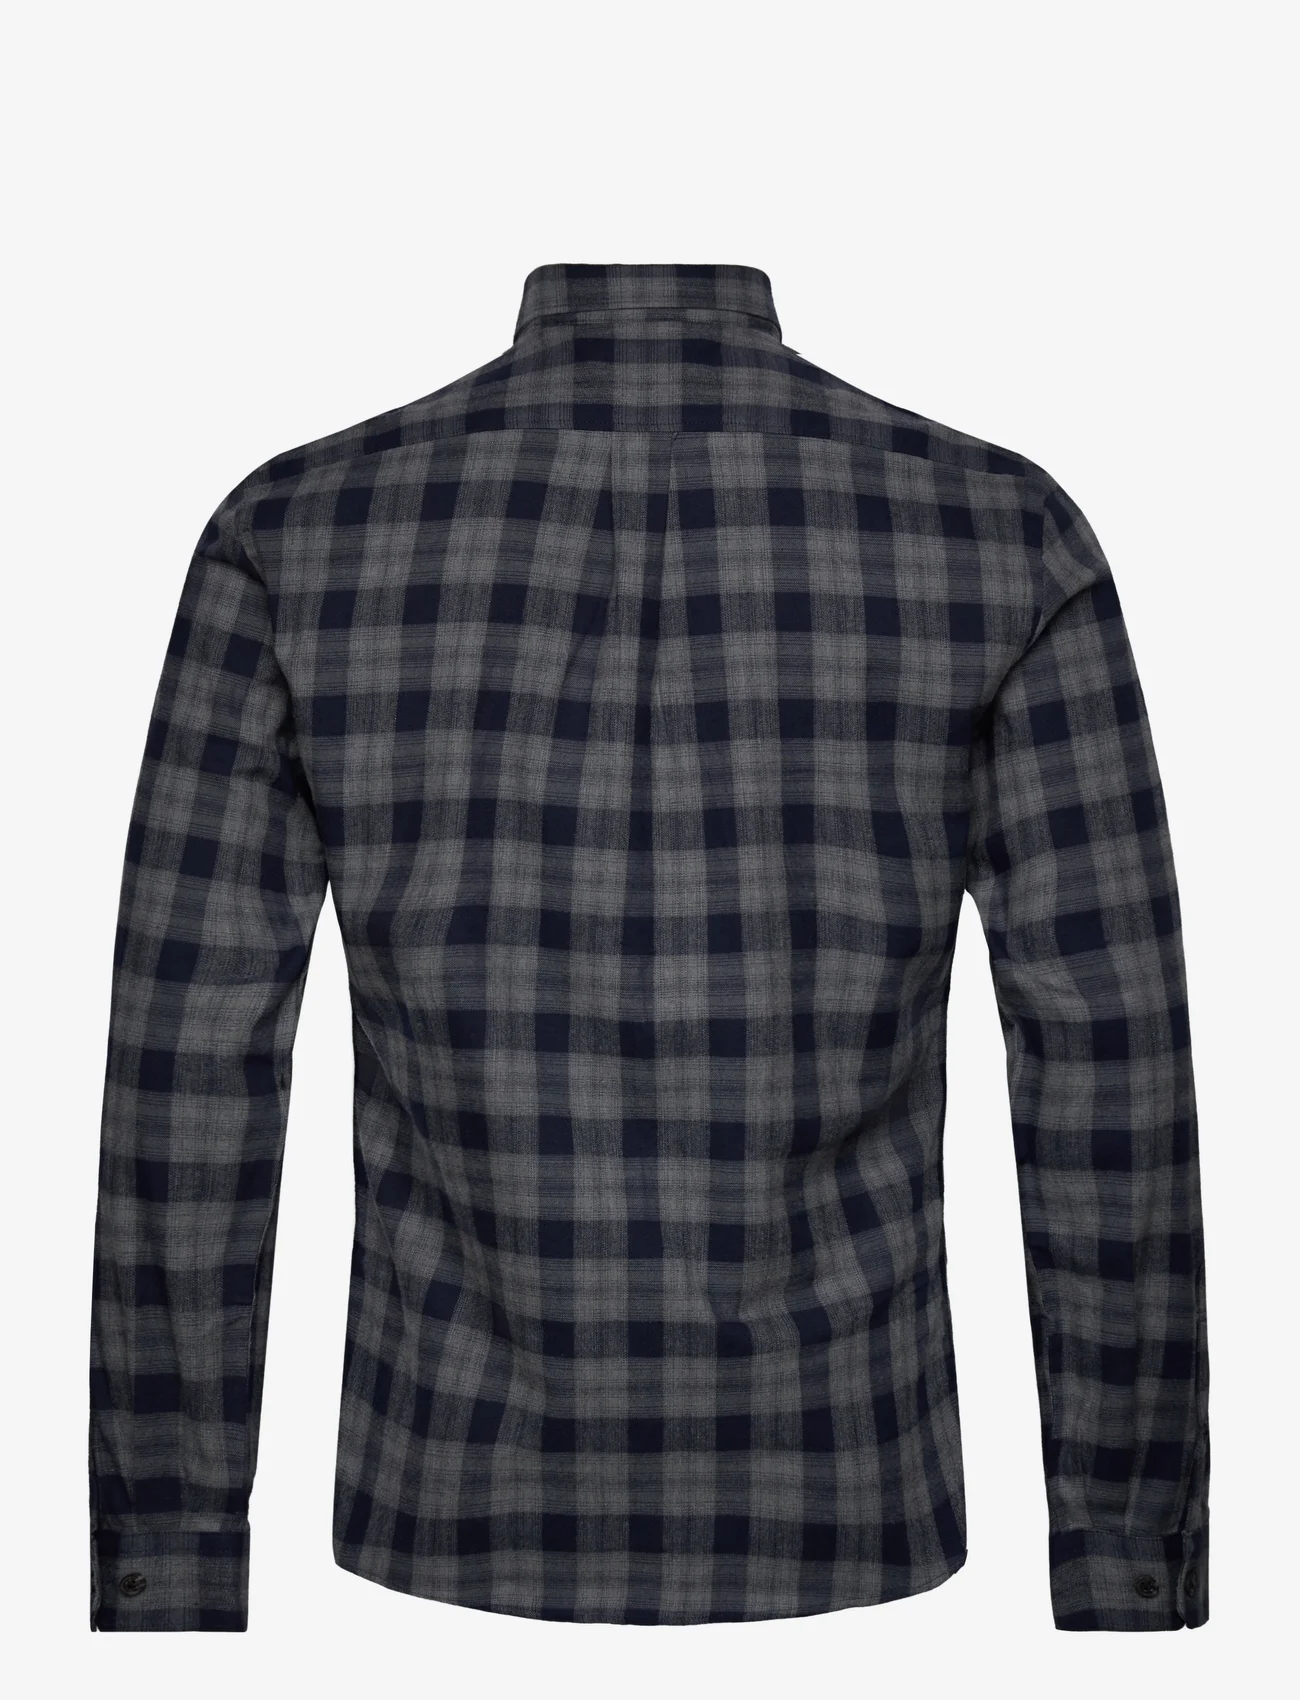 Lindbergh - Ultra soft checked shirt L/S - rutede skjorter - dk grey - 1